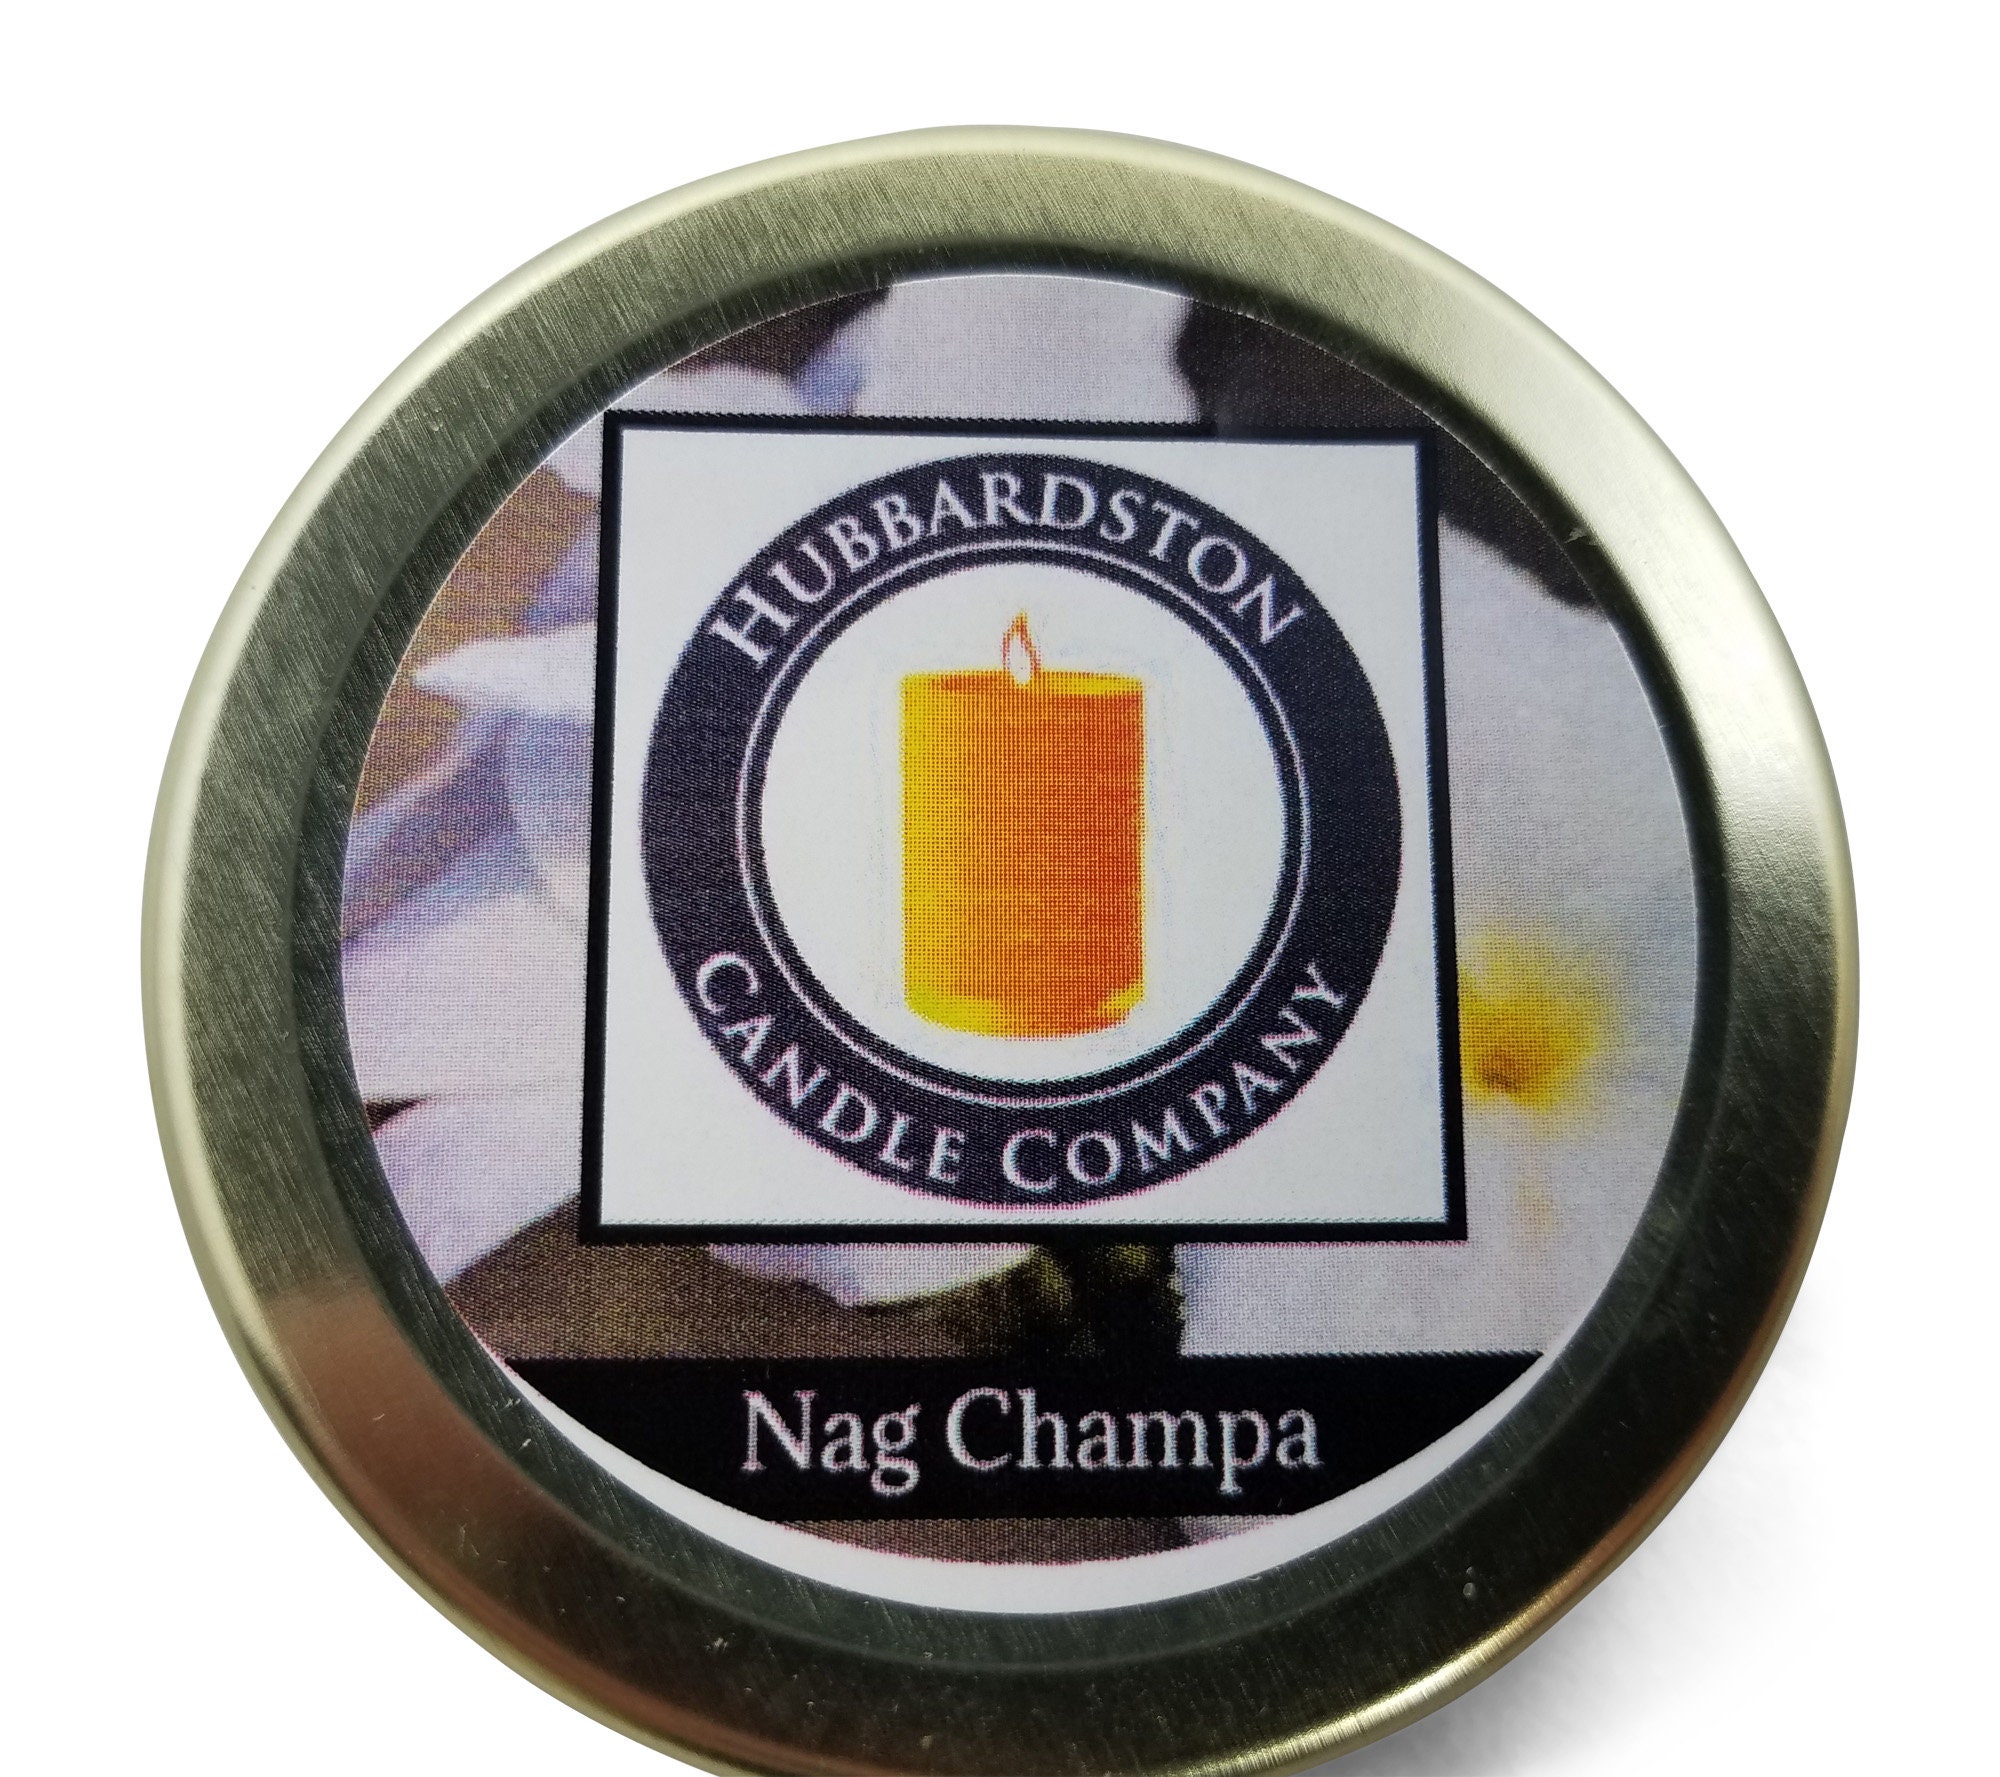 Nag Champa - Cleveland Candle Company